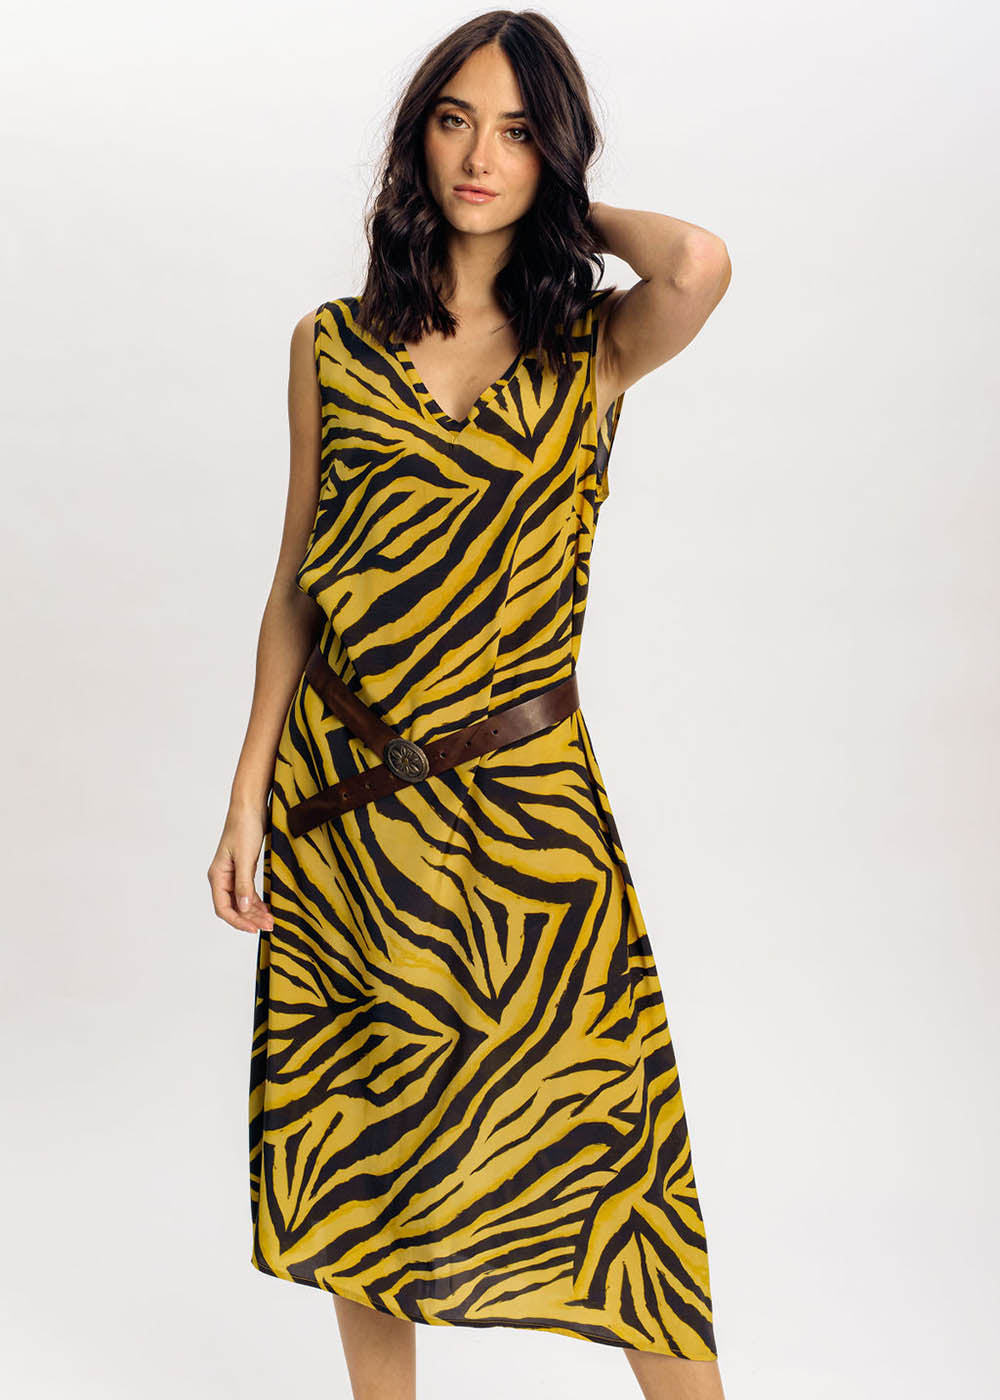 Zebra printed tunic dress